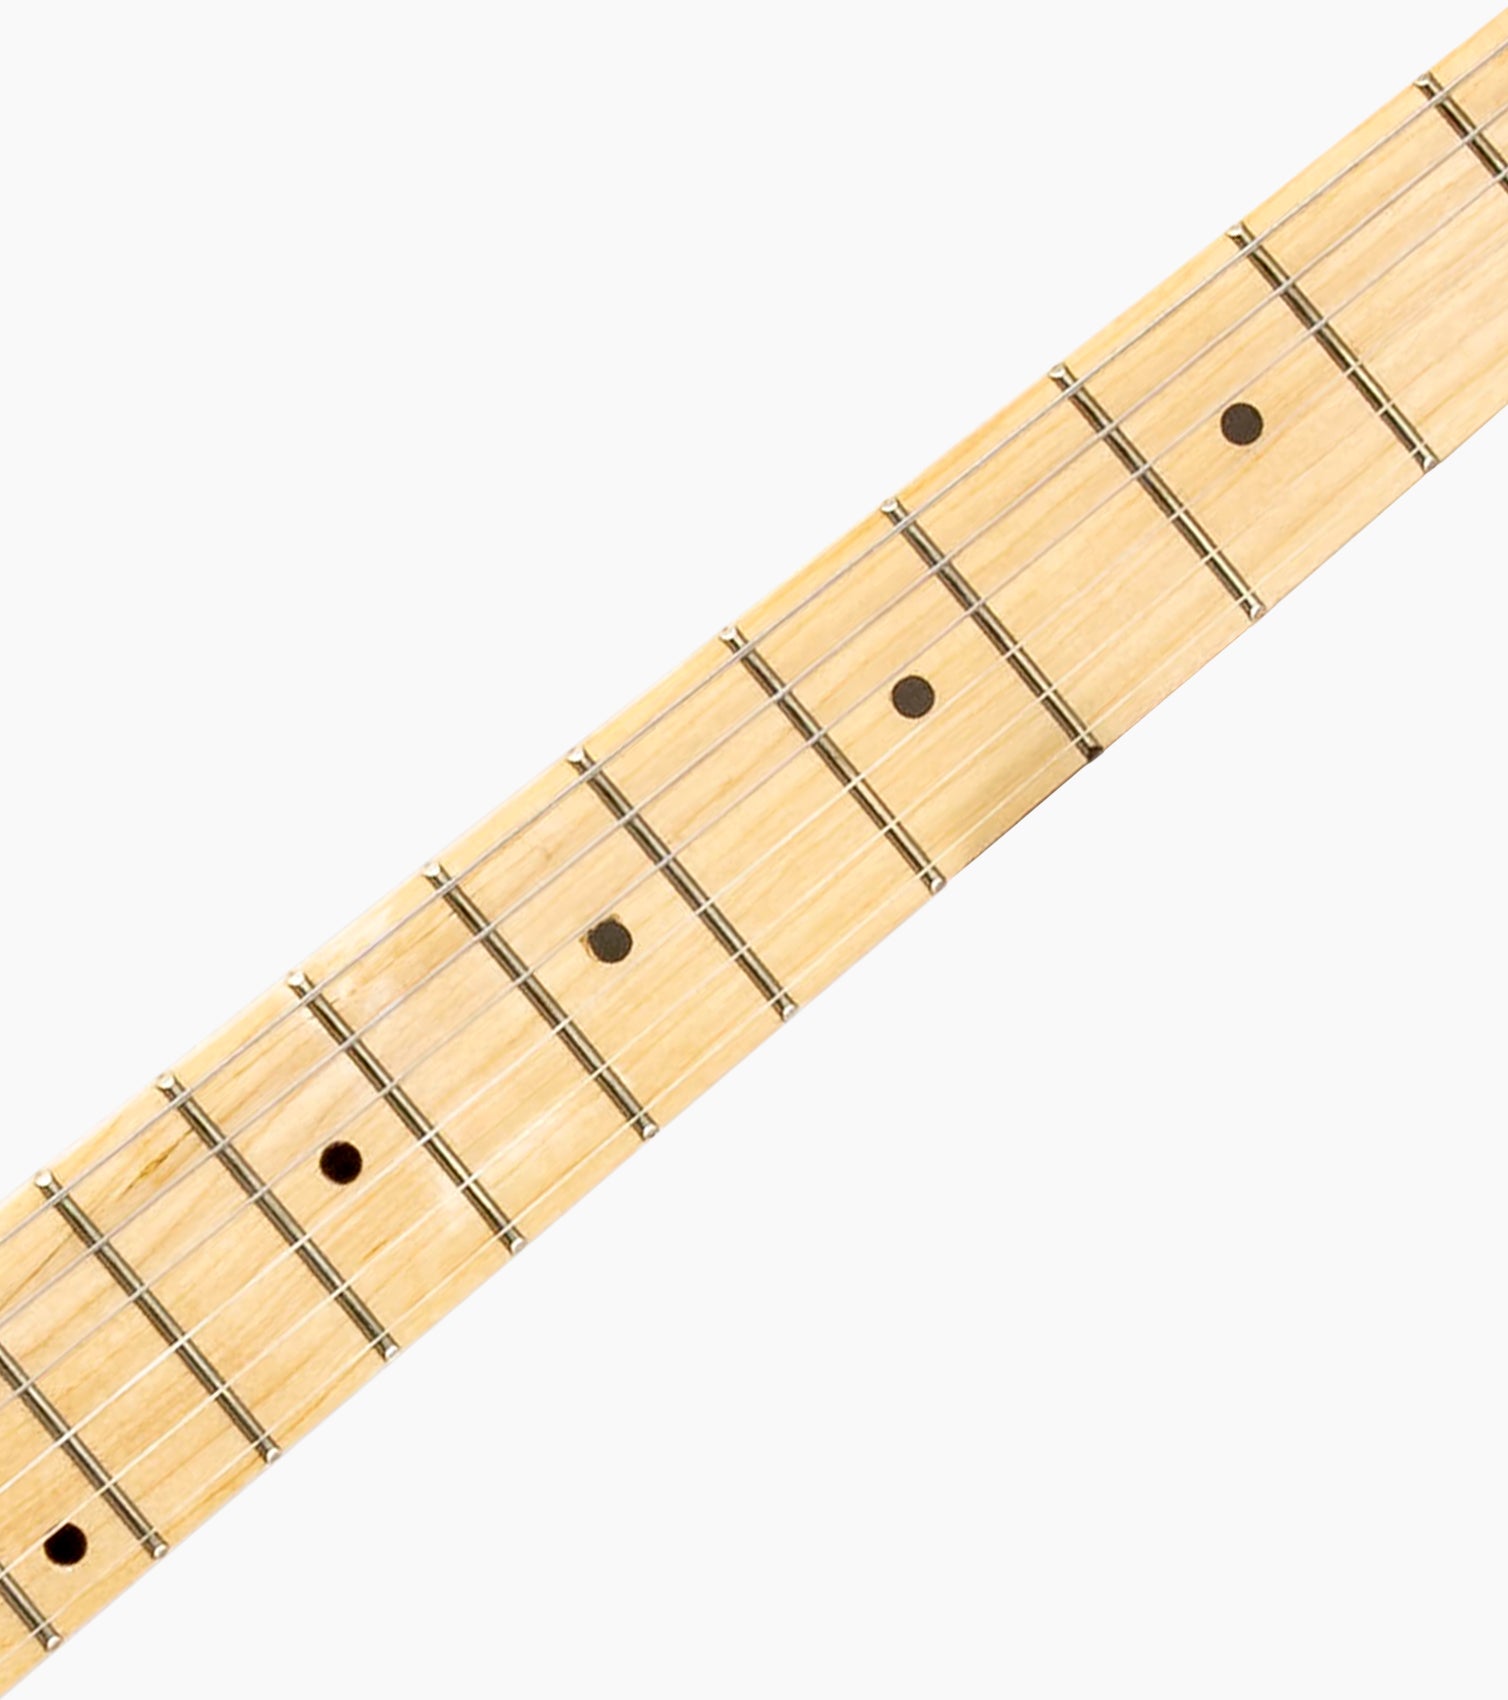 close-up of Mahogany single-cutaway electric guitar fretboard